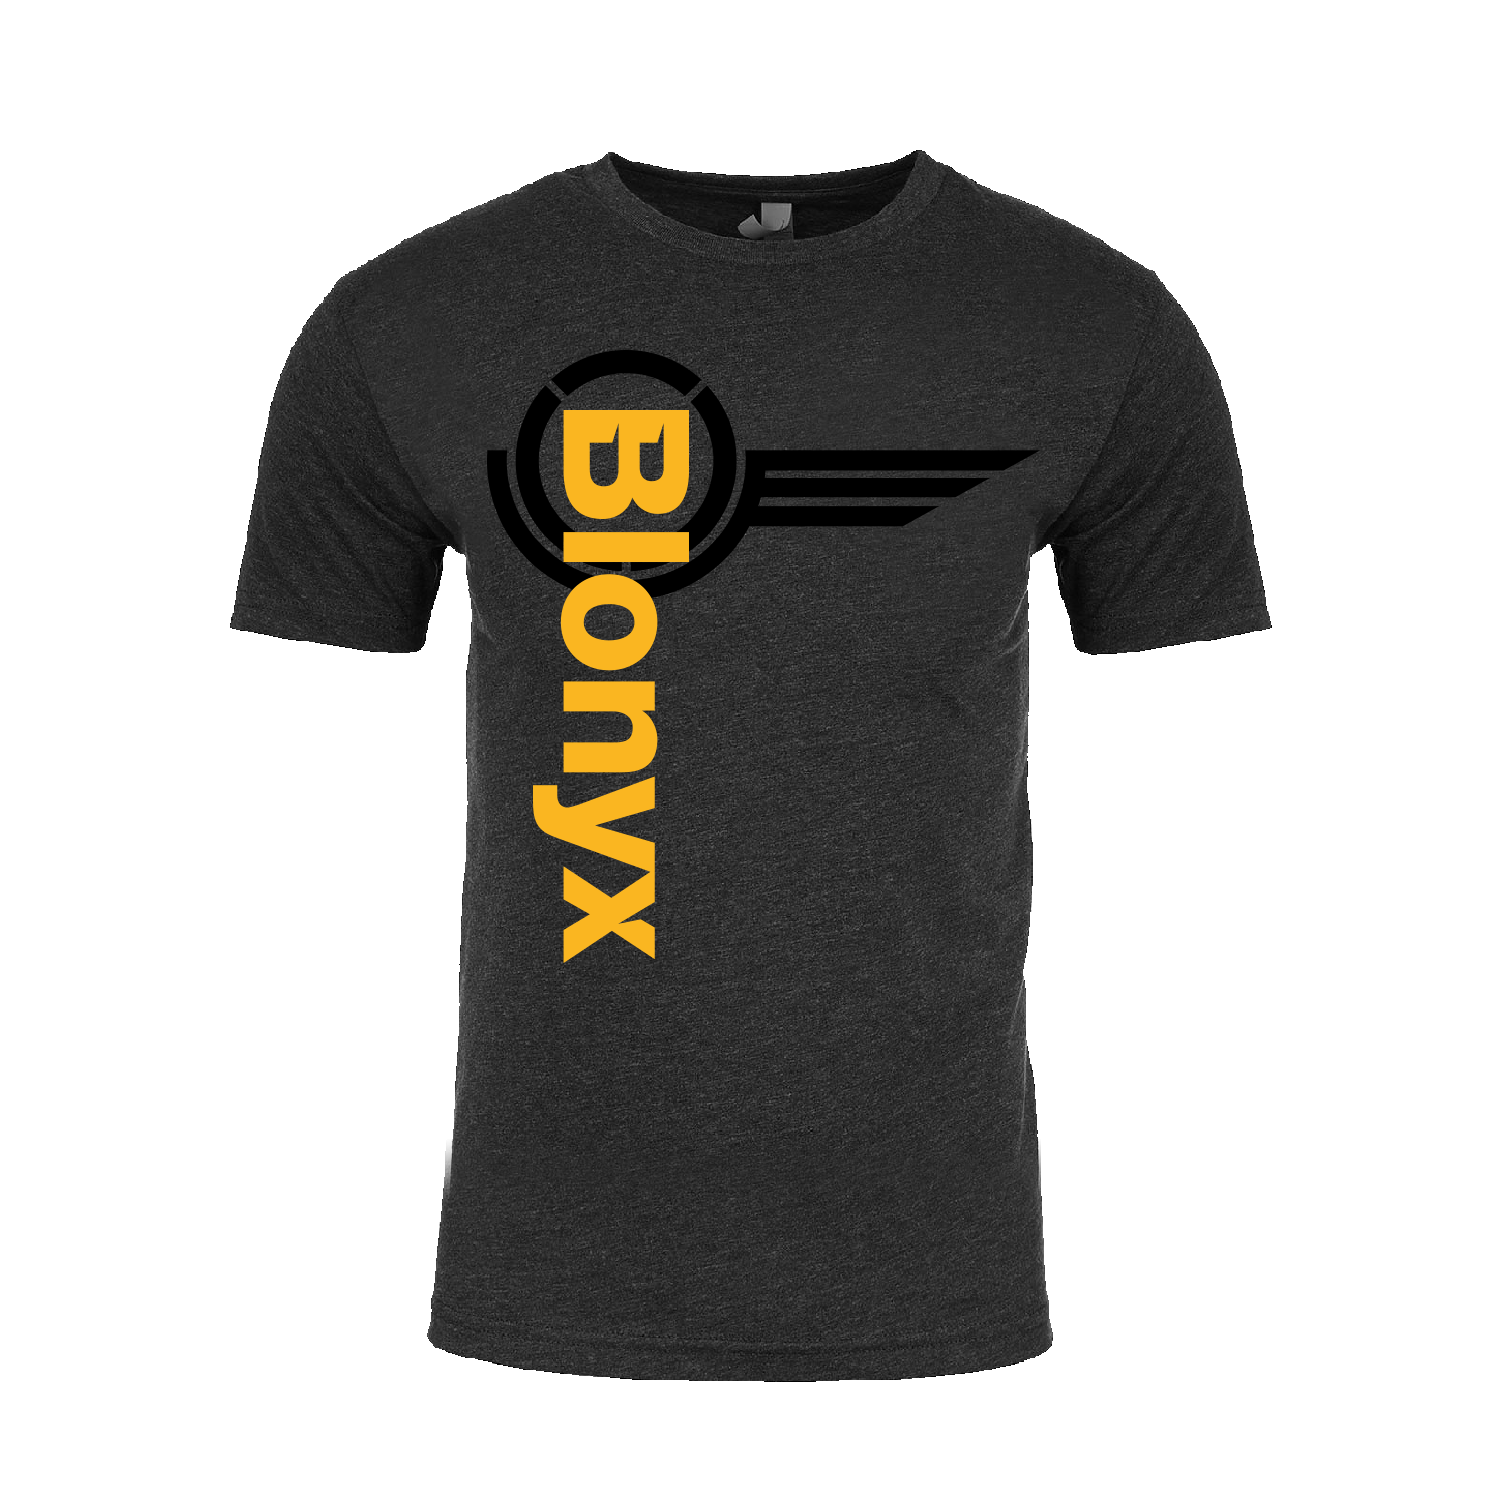 Blonyx S15 Men's Shirt